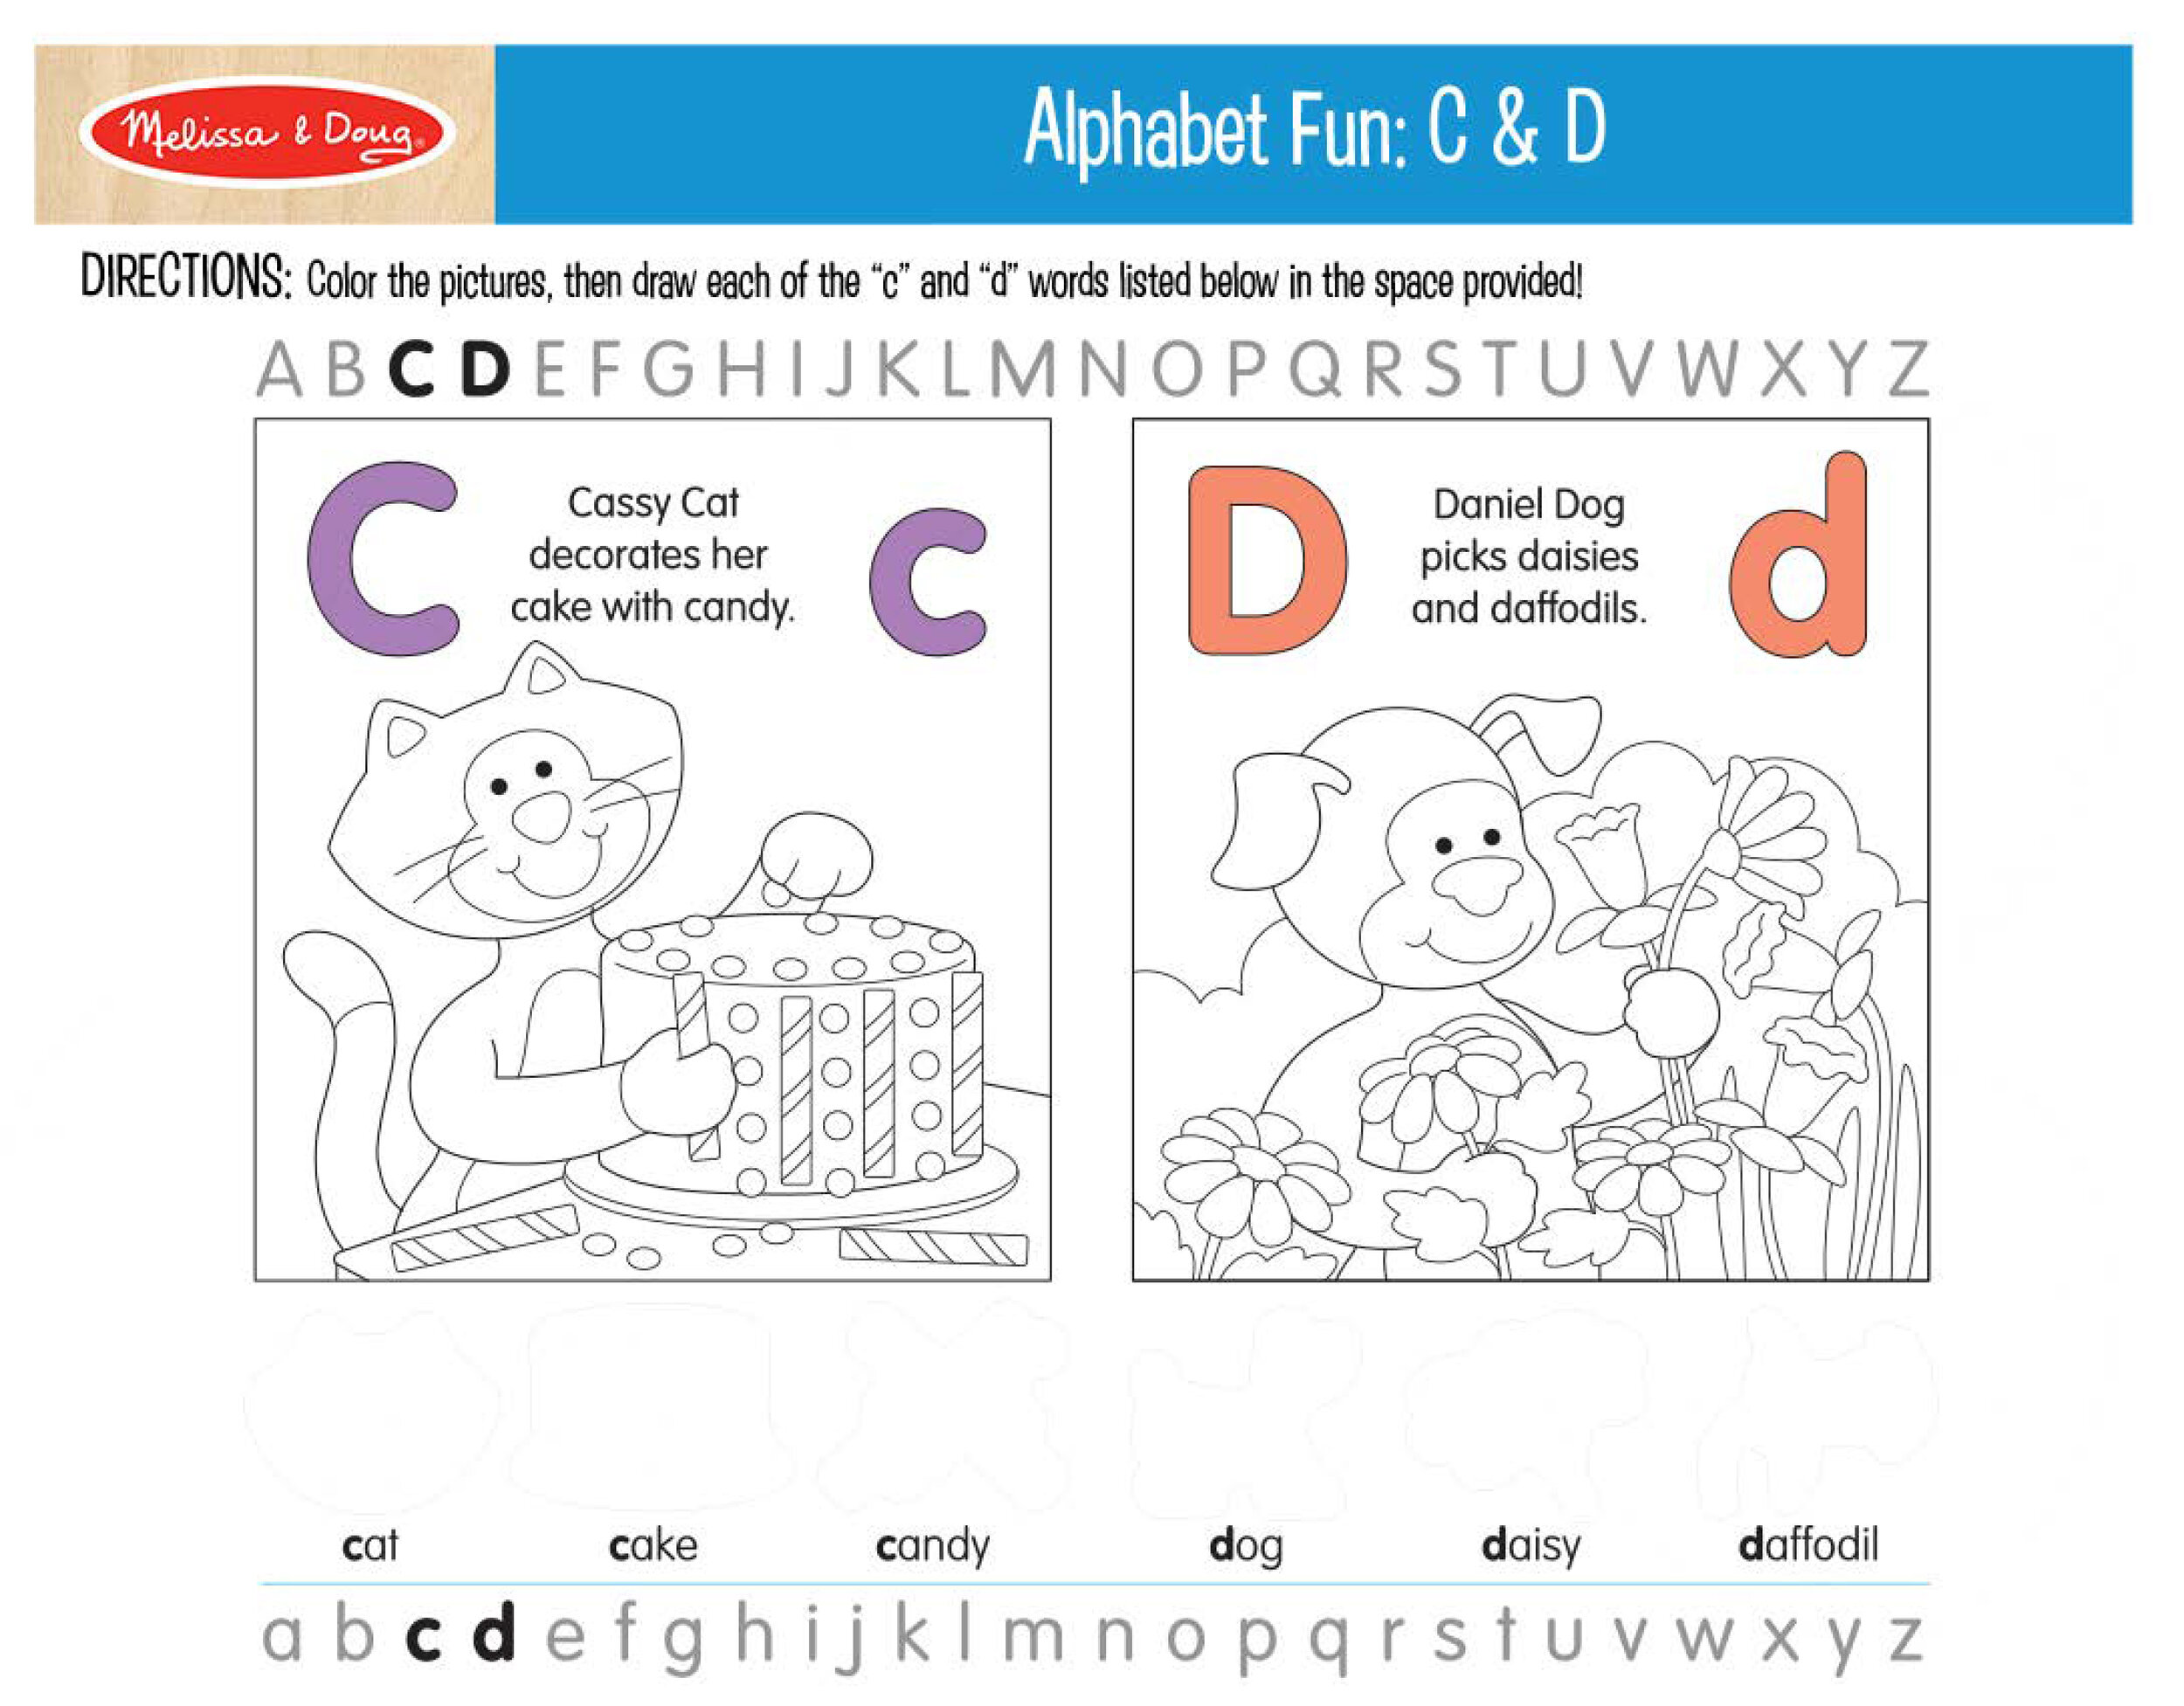 Printable_AlphabetFun-CD.jpg